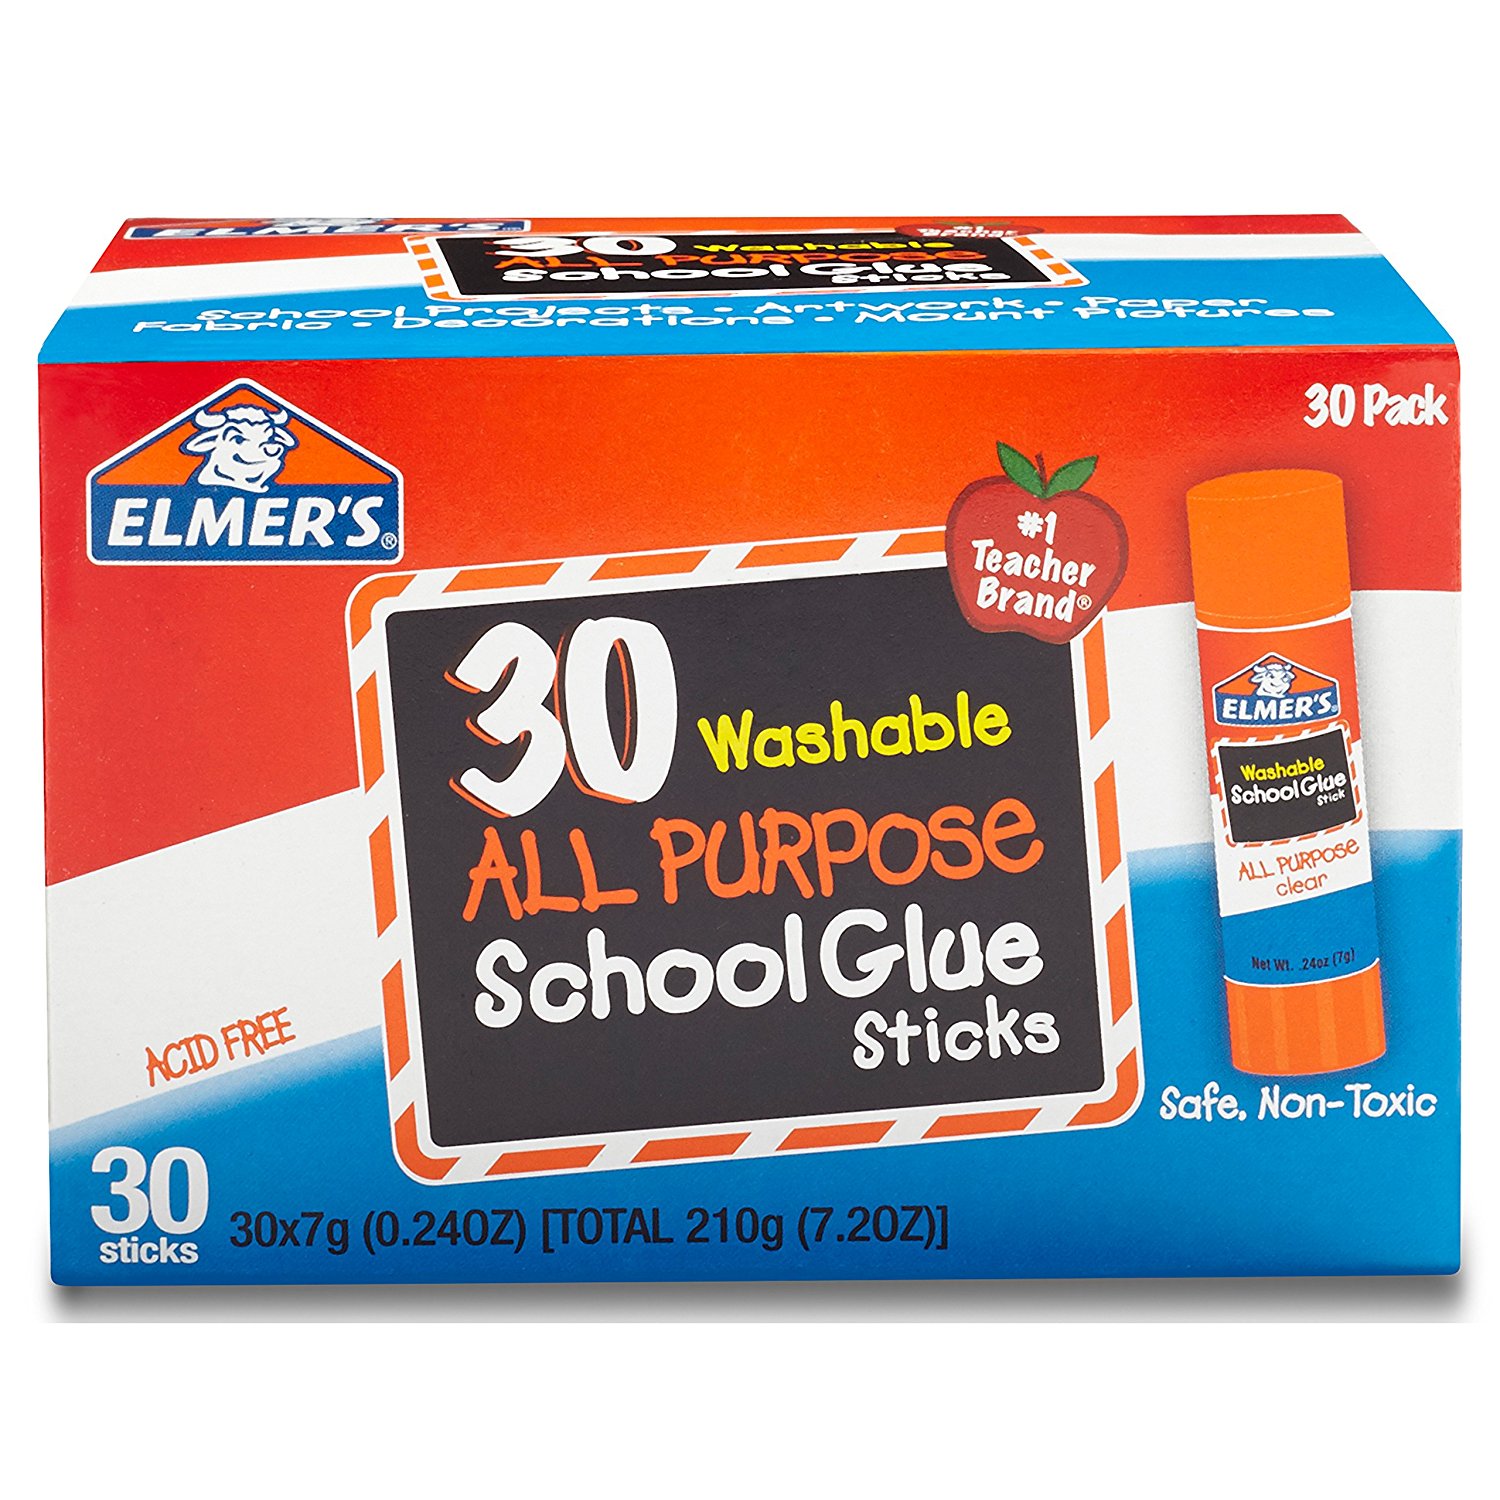 Elmer’s All Purpose School Glue Sticks, Washable, 30 Pack – Just $8.39!